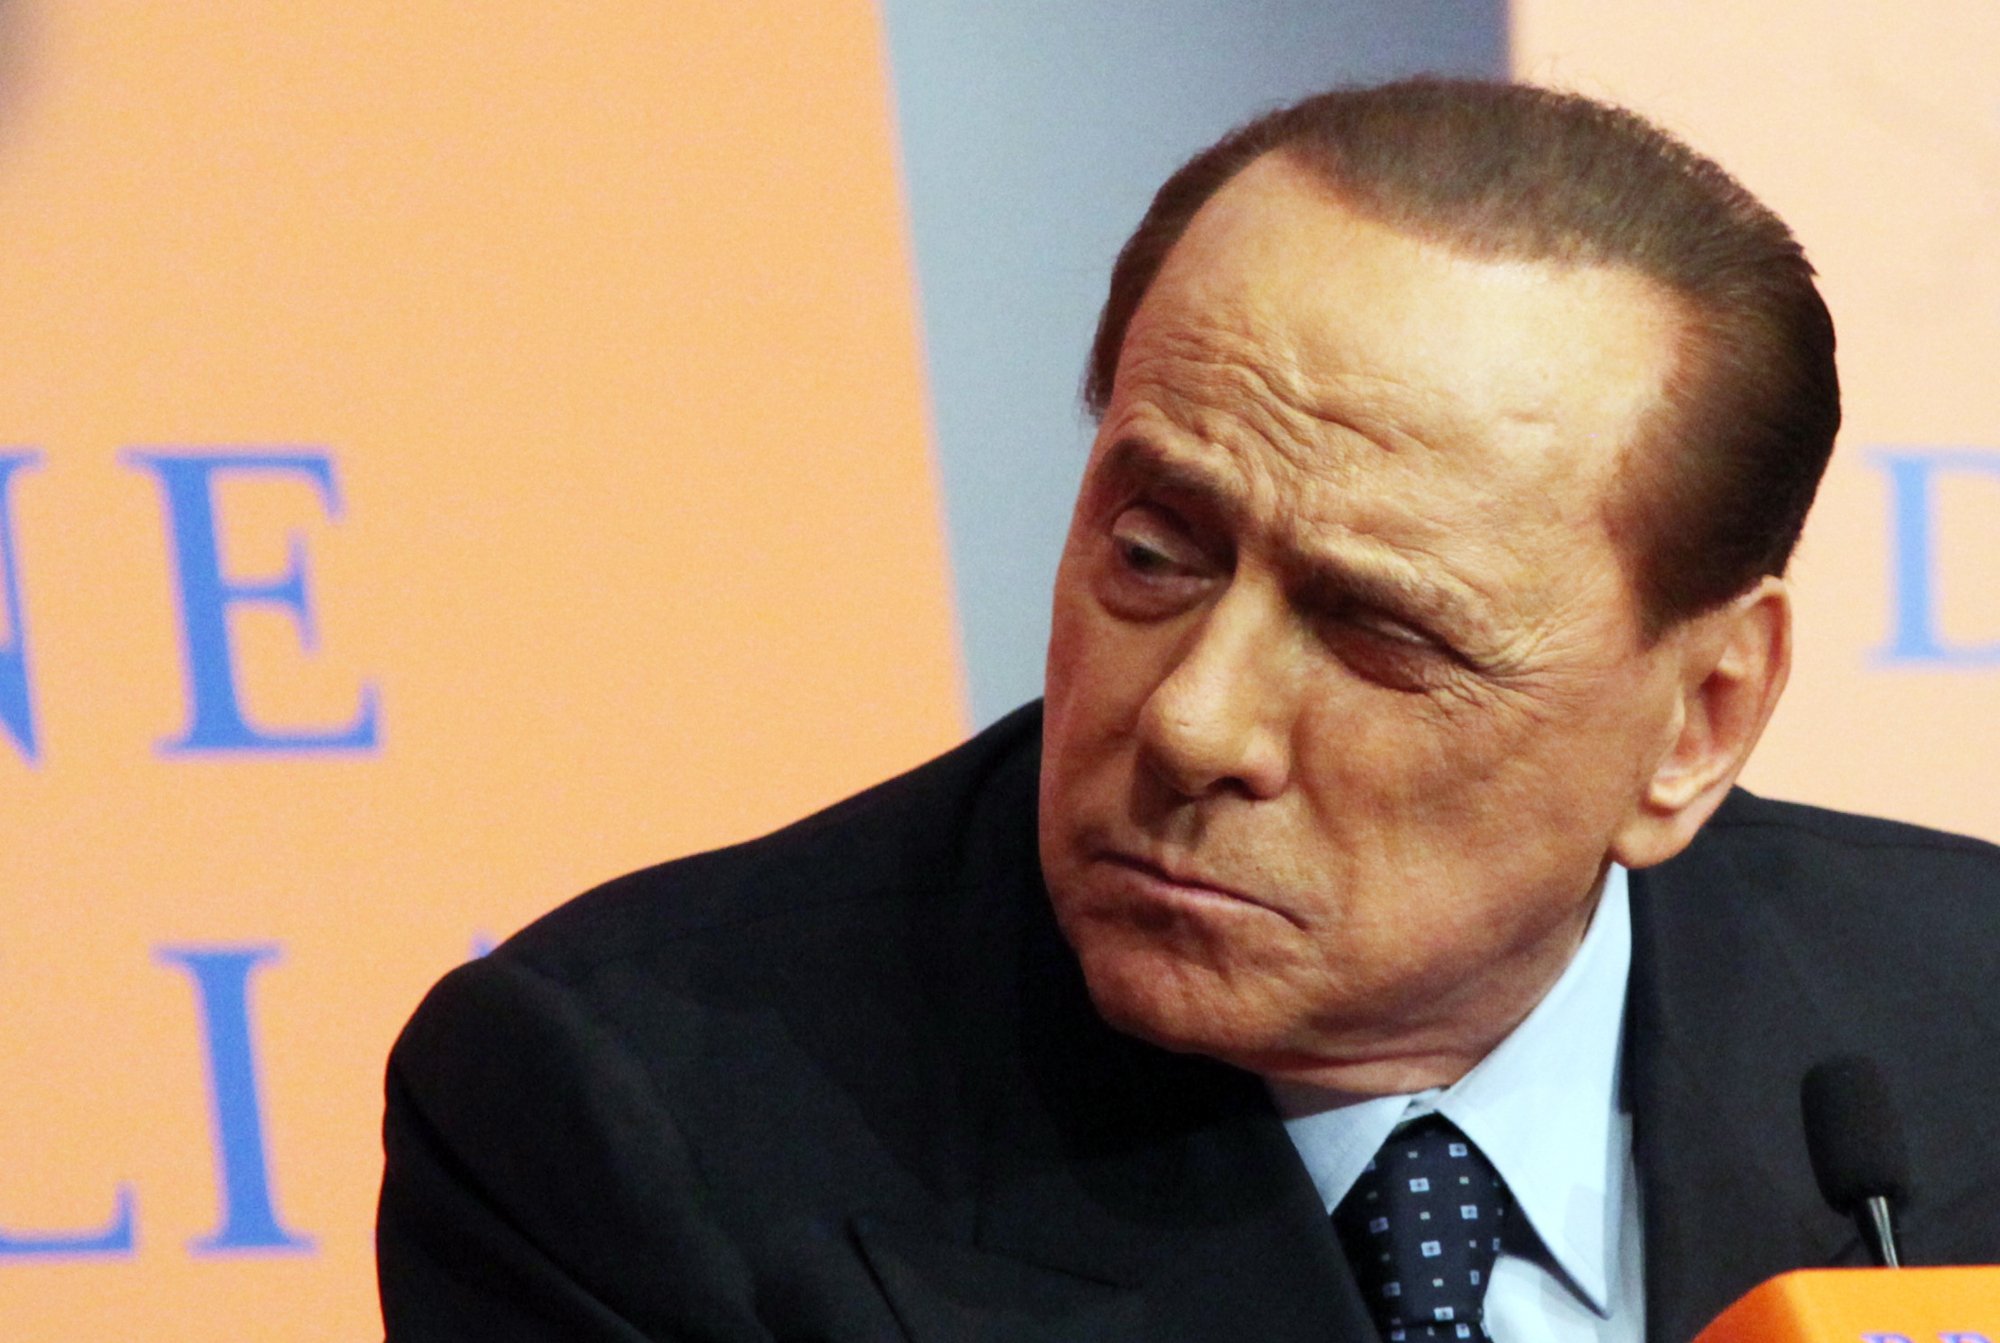 Silvio Berlusconi lors de la présentation du livre 